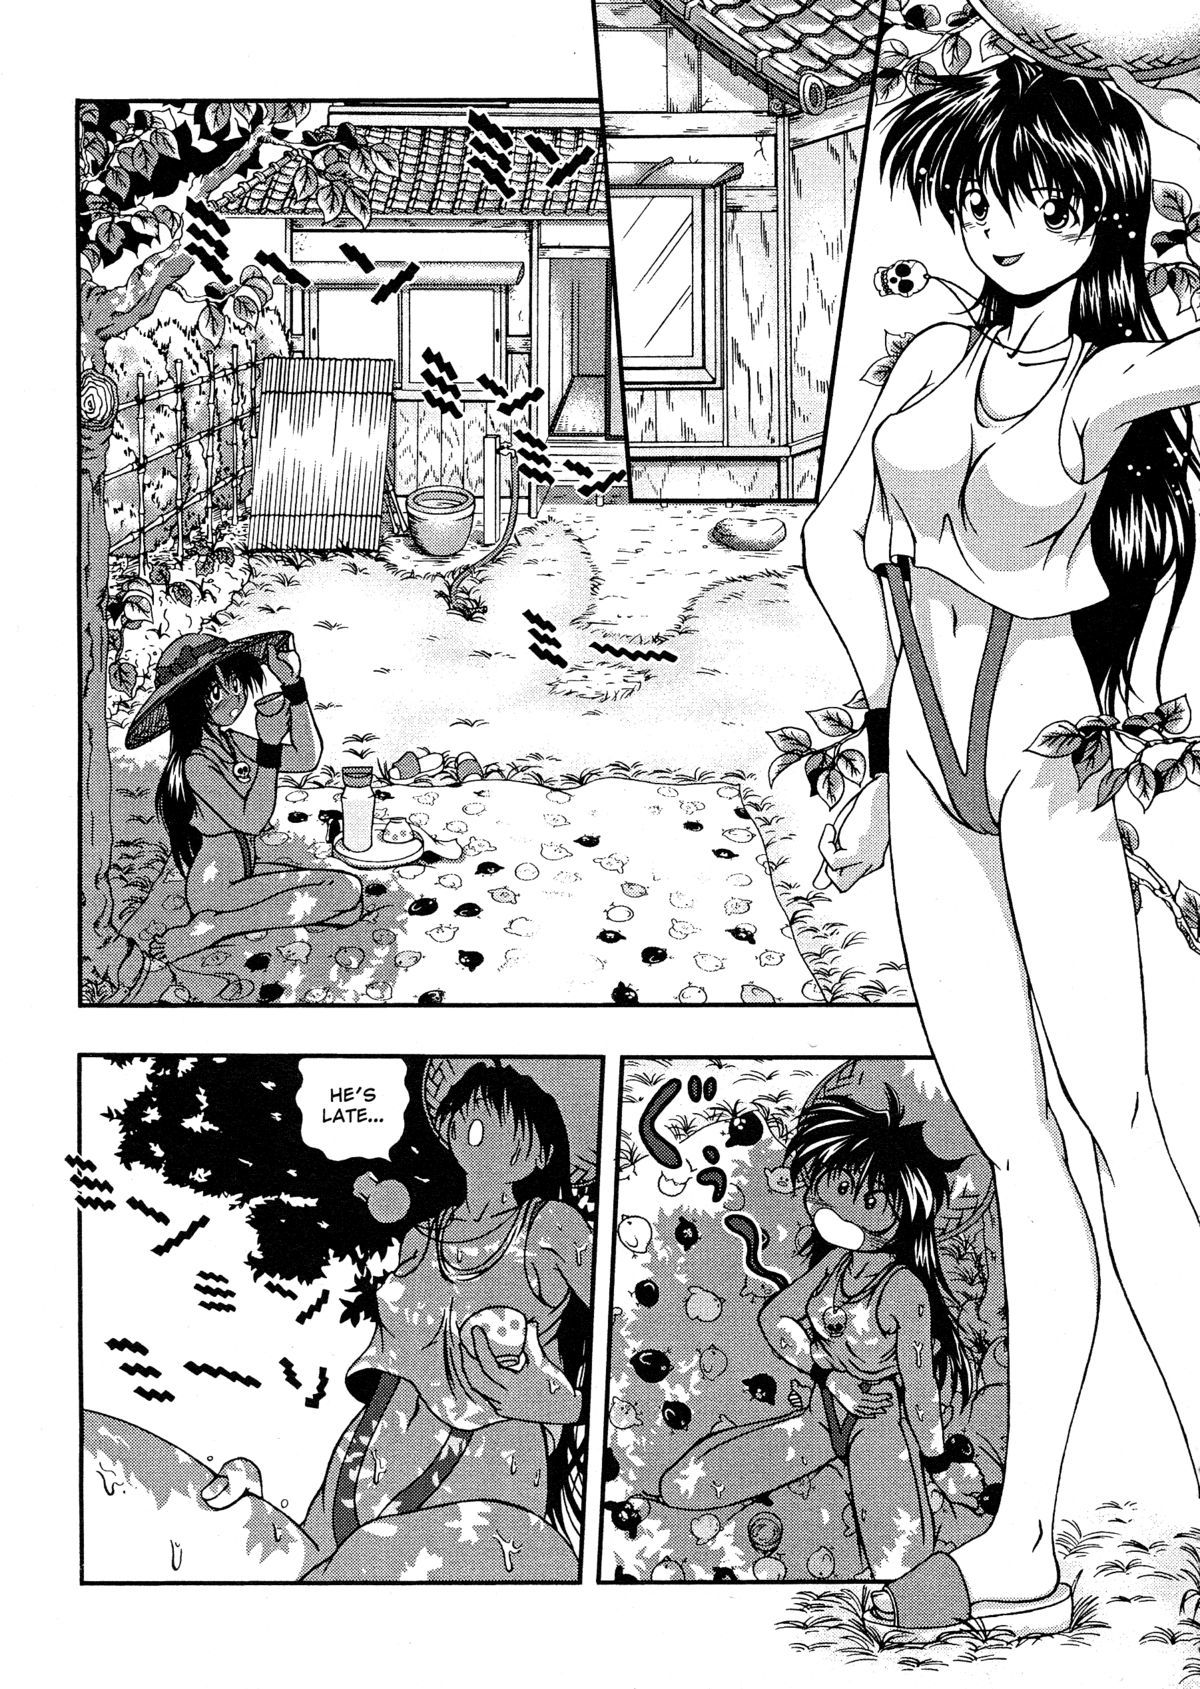 Flashbang!Hi-res 149 hentai manga